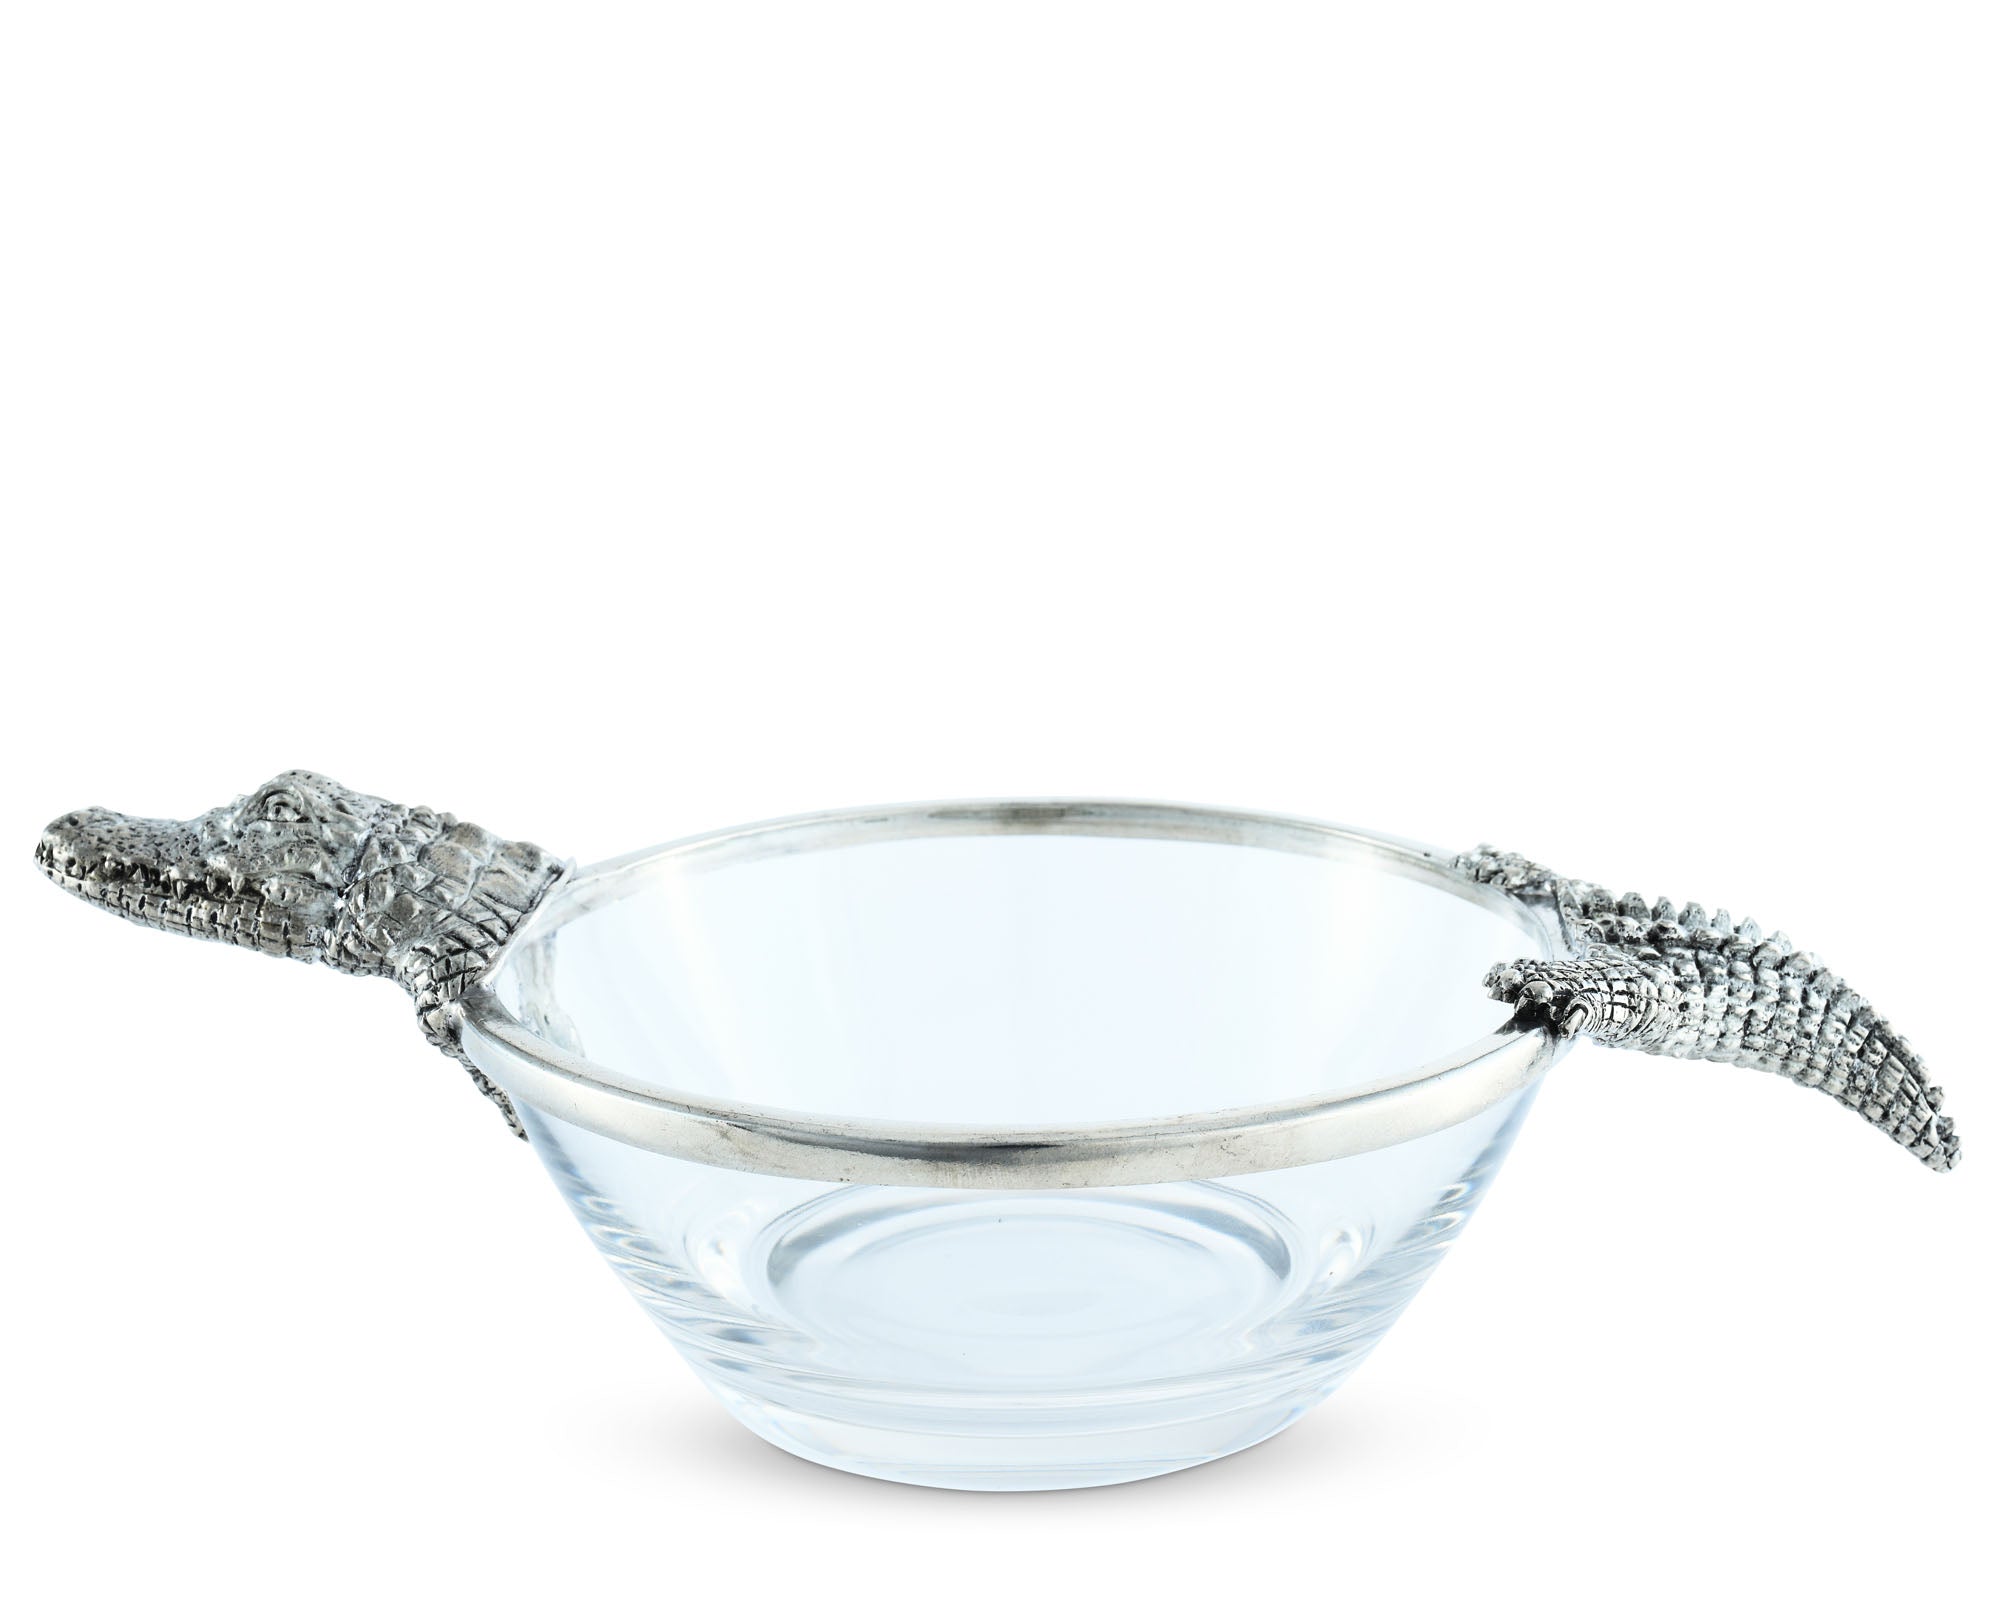 Vagabond House Alligator Glass Dip Bowl Product Image